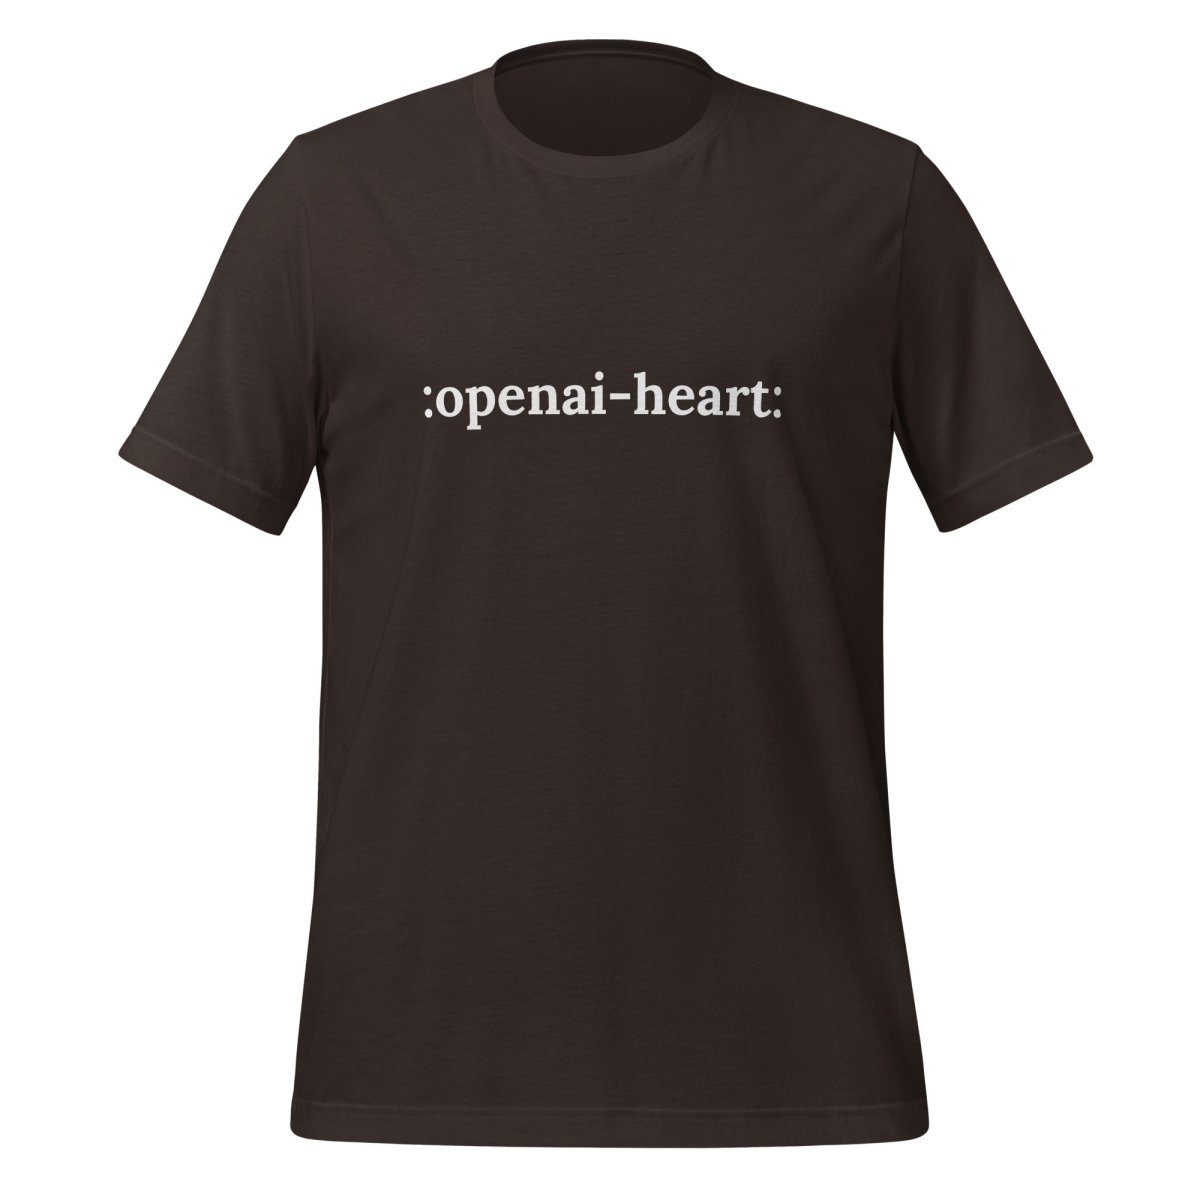 :openai - heart: T - Shirt (unisex) - Brown - AI Store